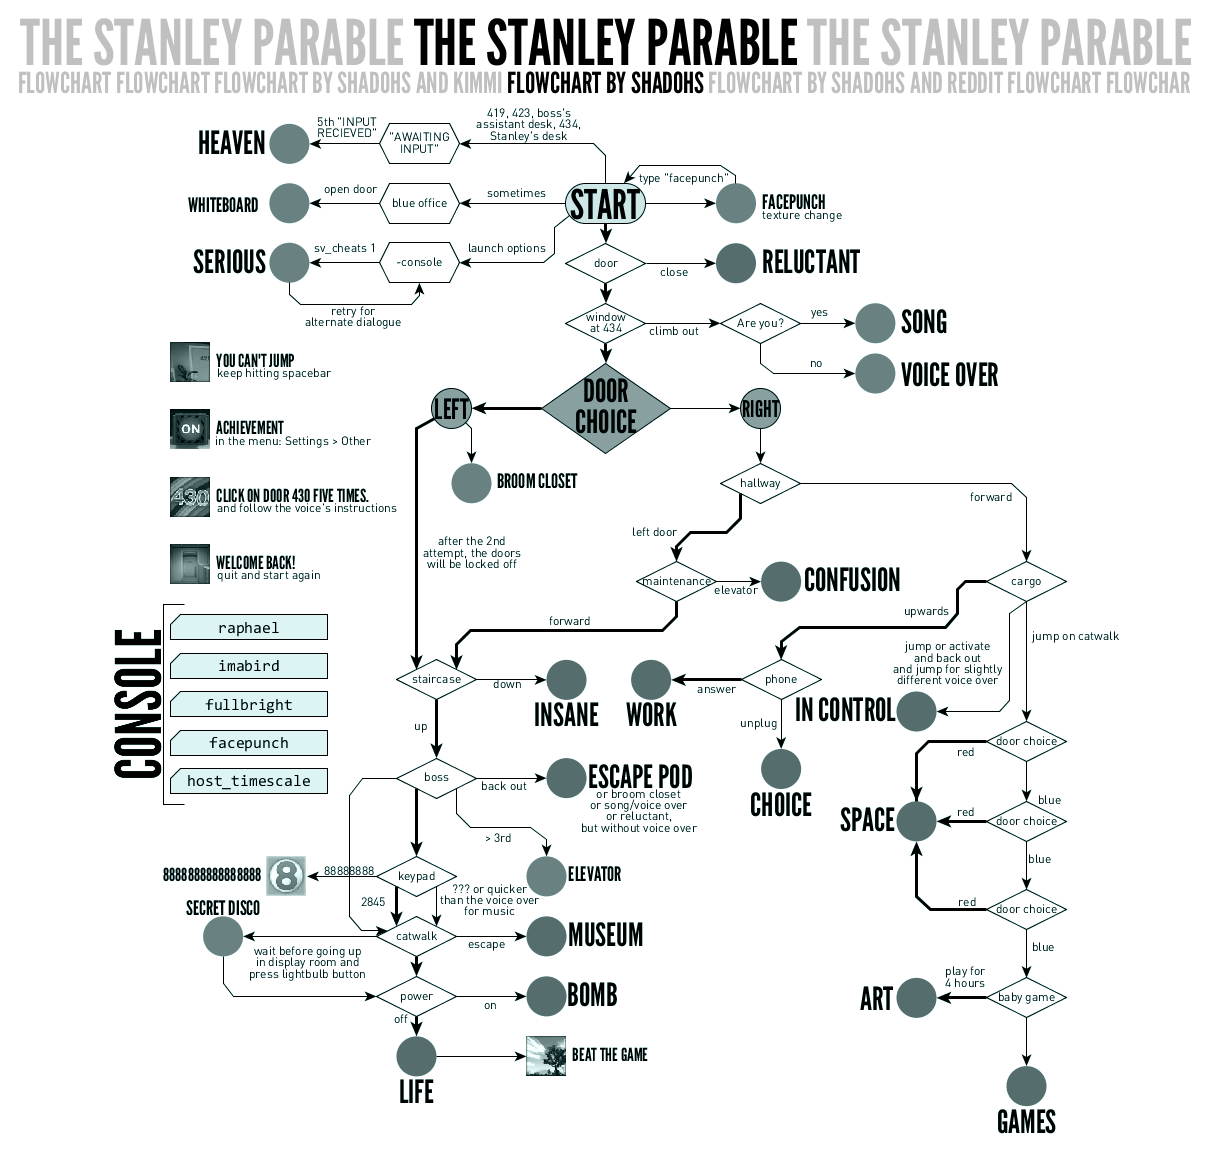 Stanley parable deluxe концовки. Древо концовок Стэнли парабл. The Stanley Parable карта концовок. The Stanley Parable схема. Концовки Стэнли.